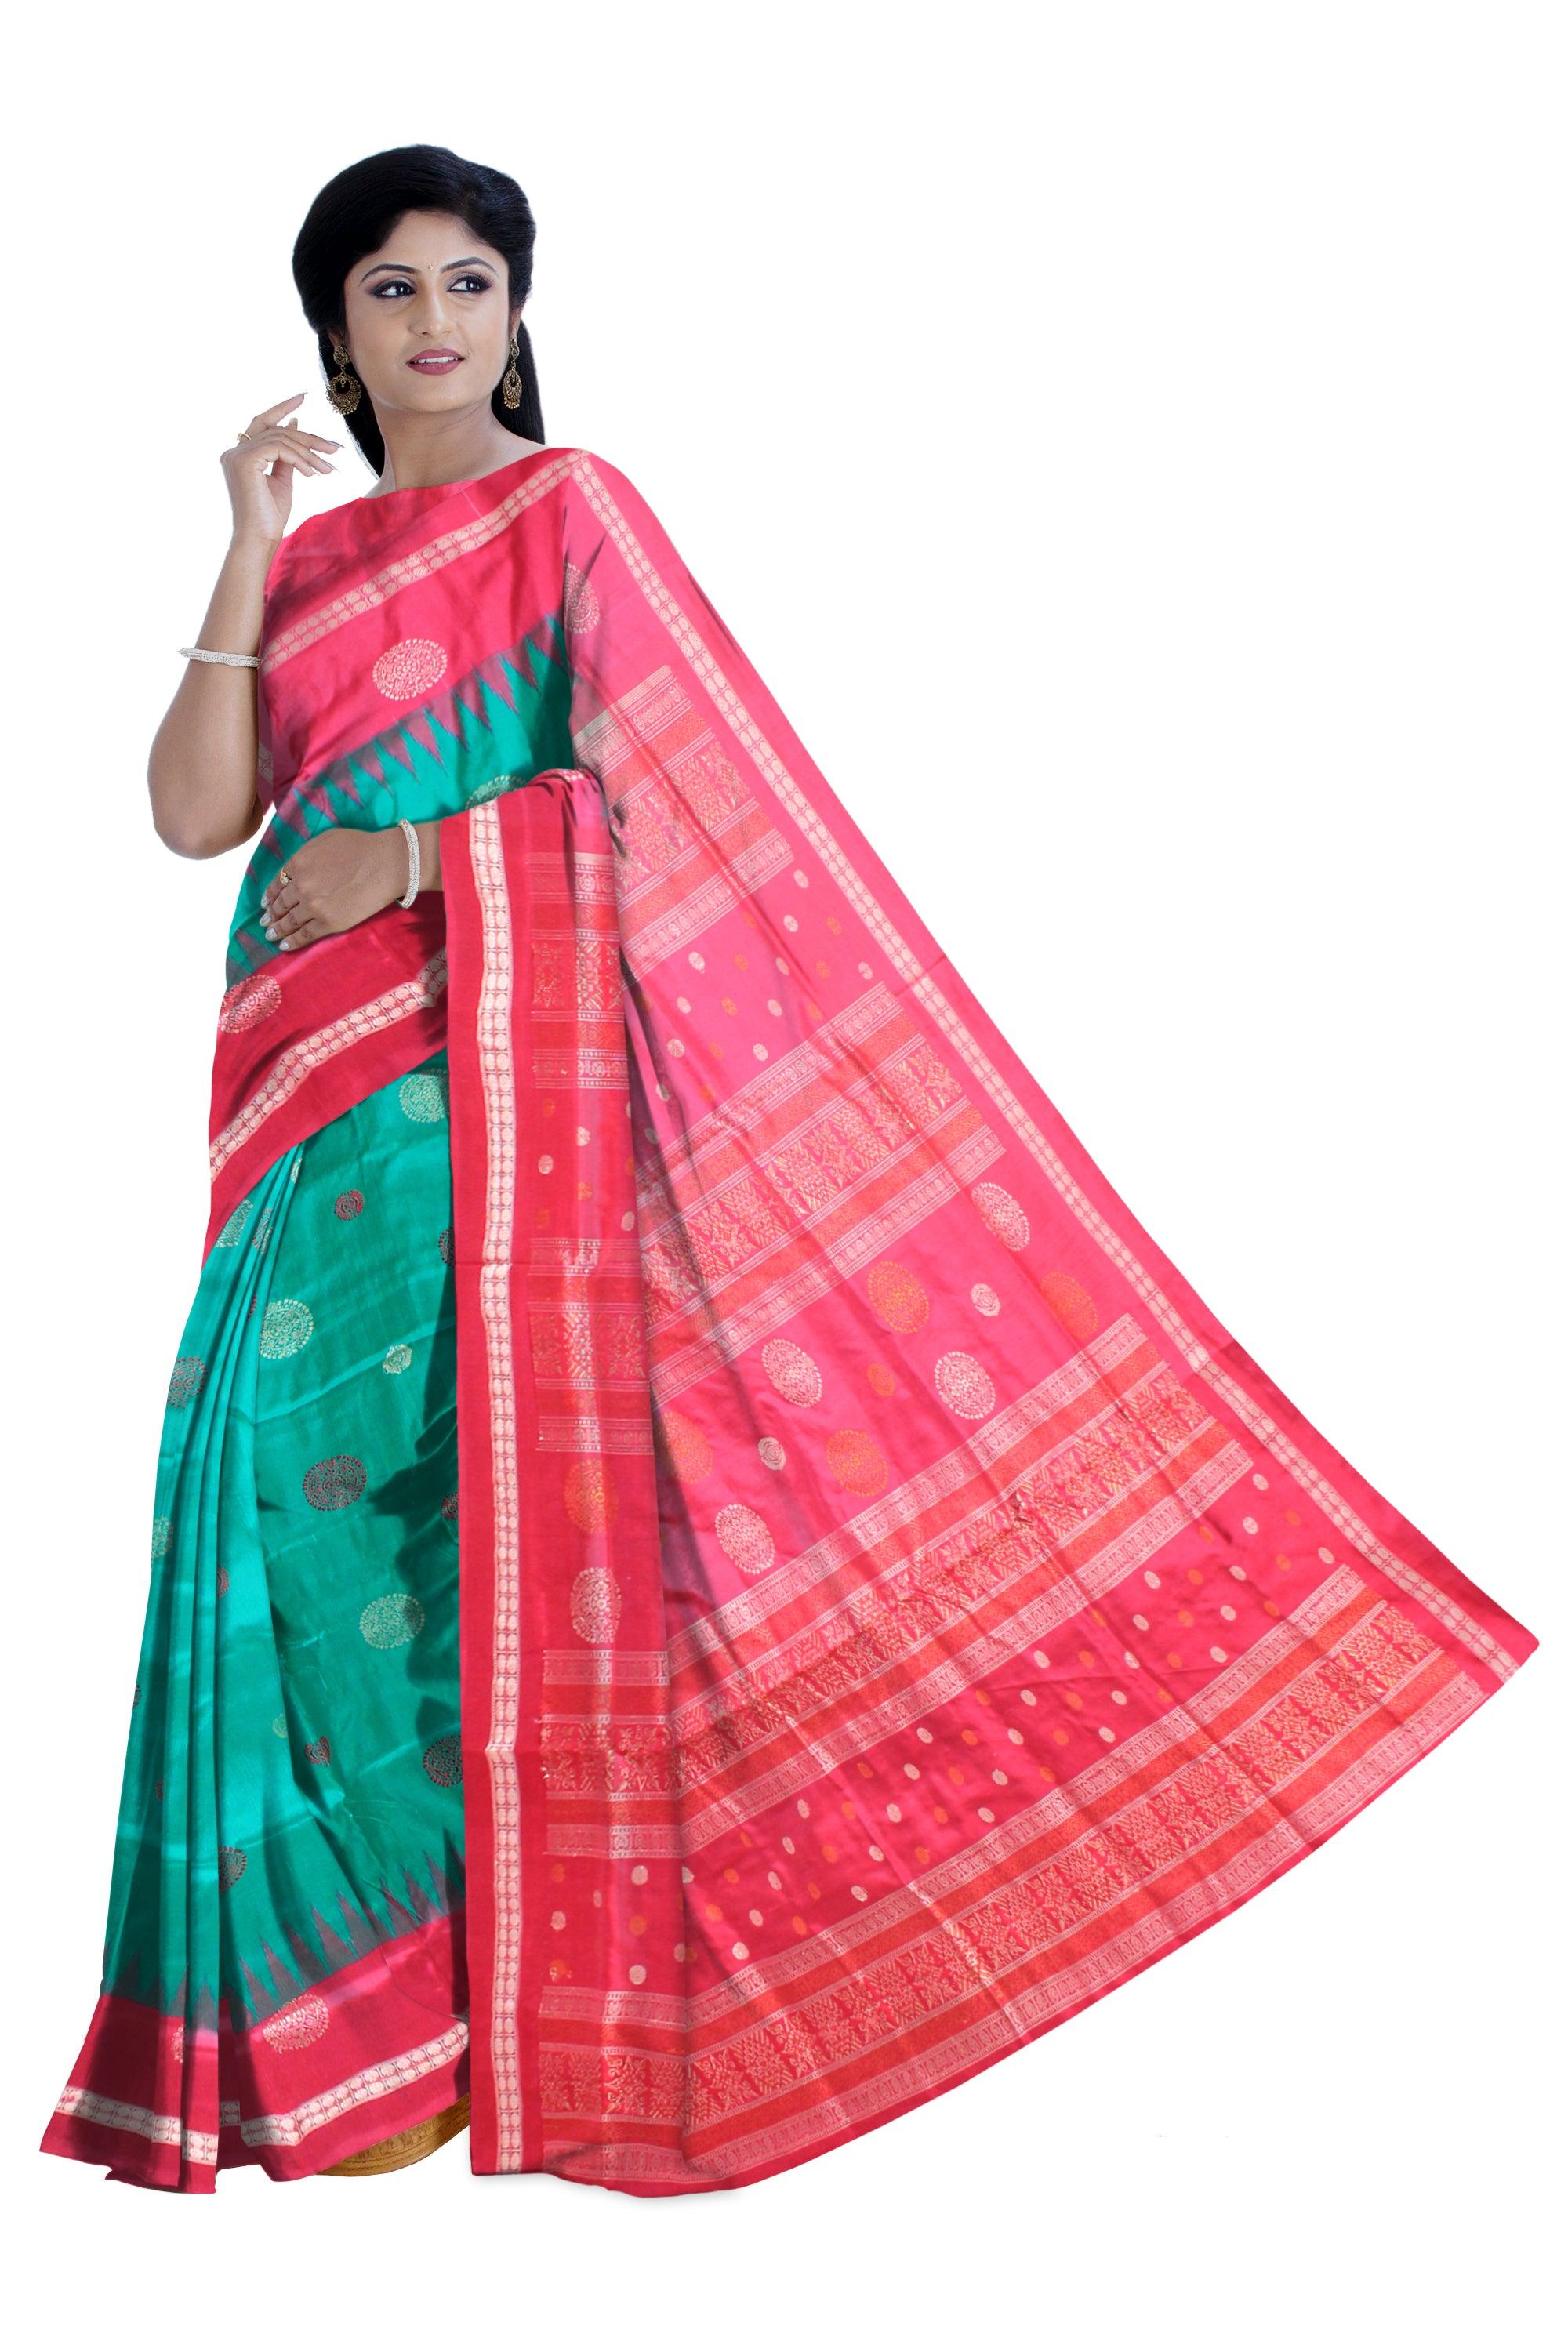 Sky color bace small and big booty pattern Samablpuri Pata saree with blouse piece. - Koshali Arts & Crafts Enterprise